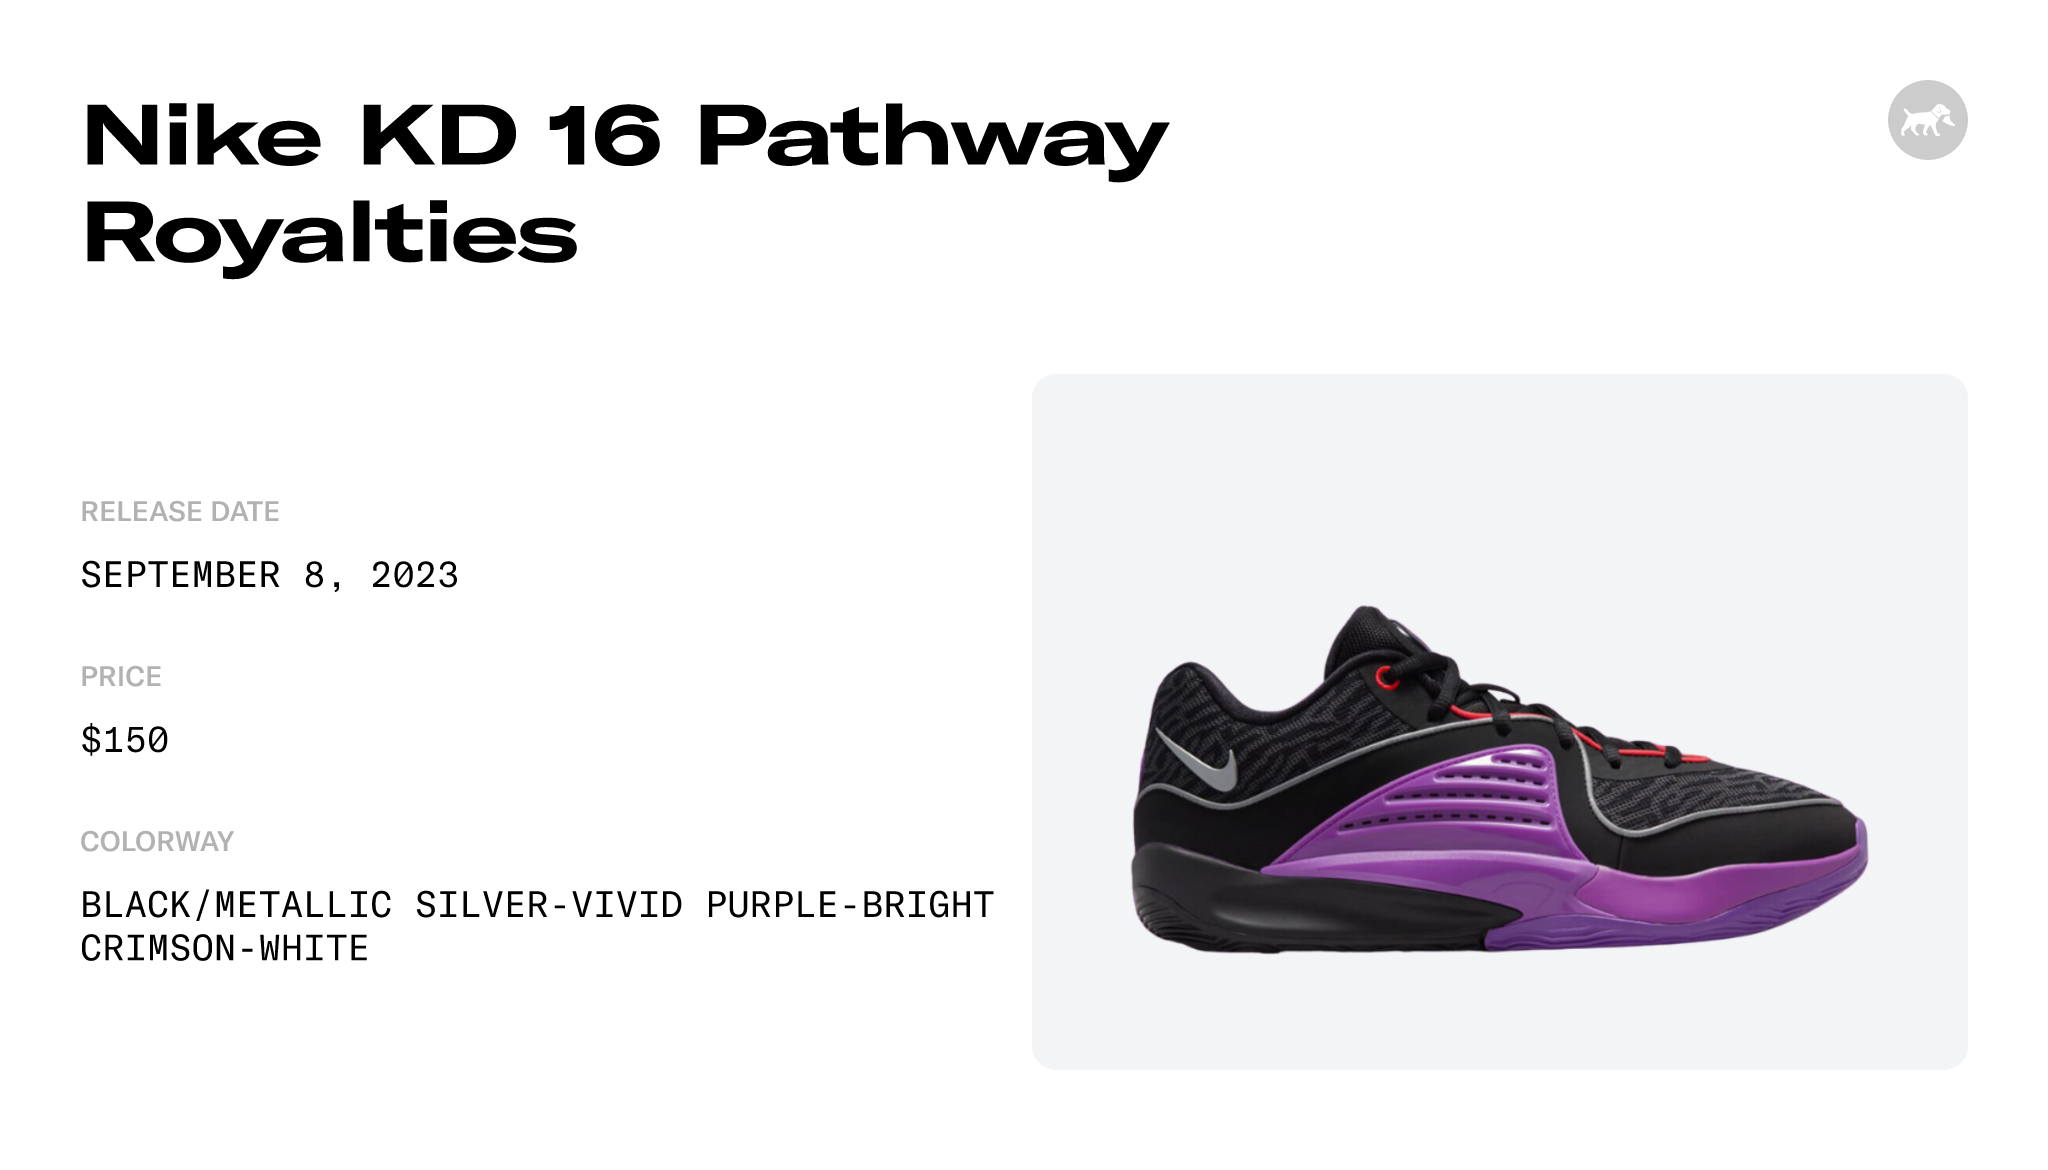 Nike KD 16 Pathway Royalties - DV2917-002 Raffles and Release Date